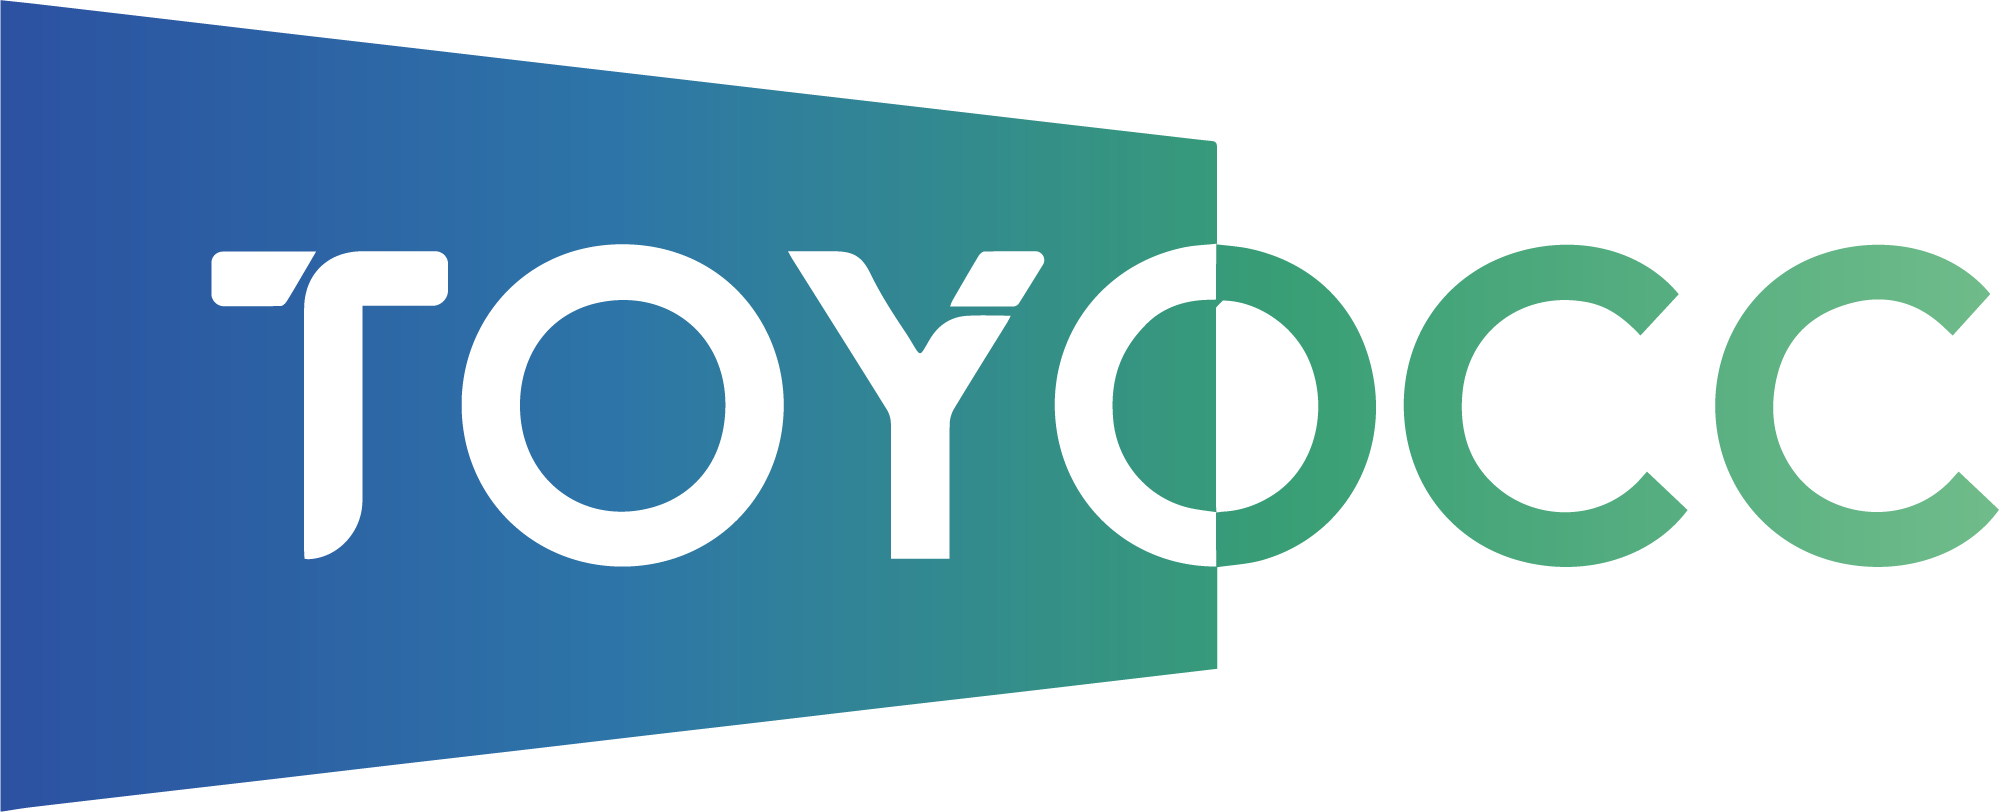 toyocc_logo